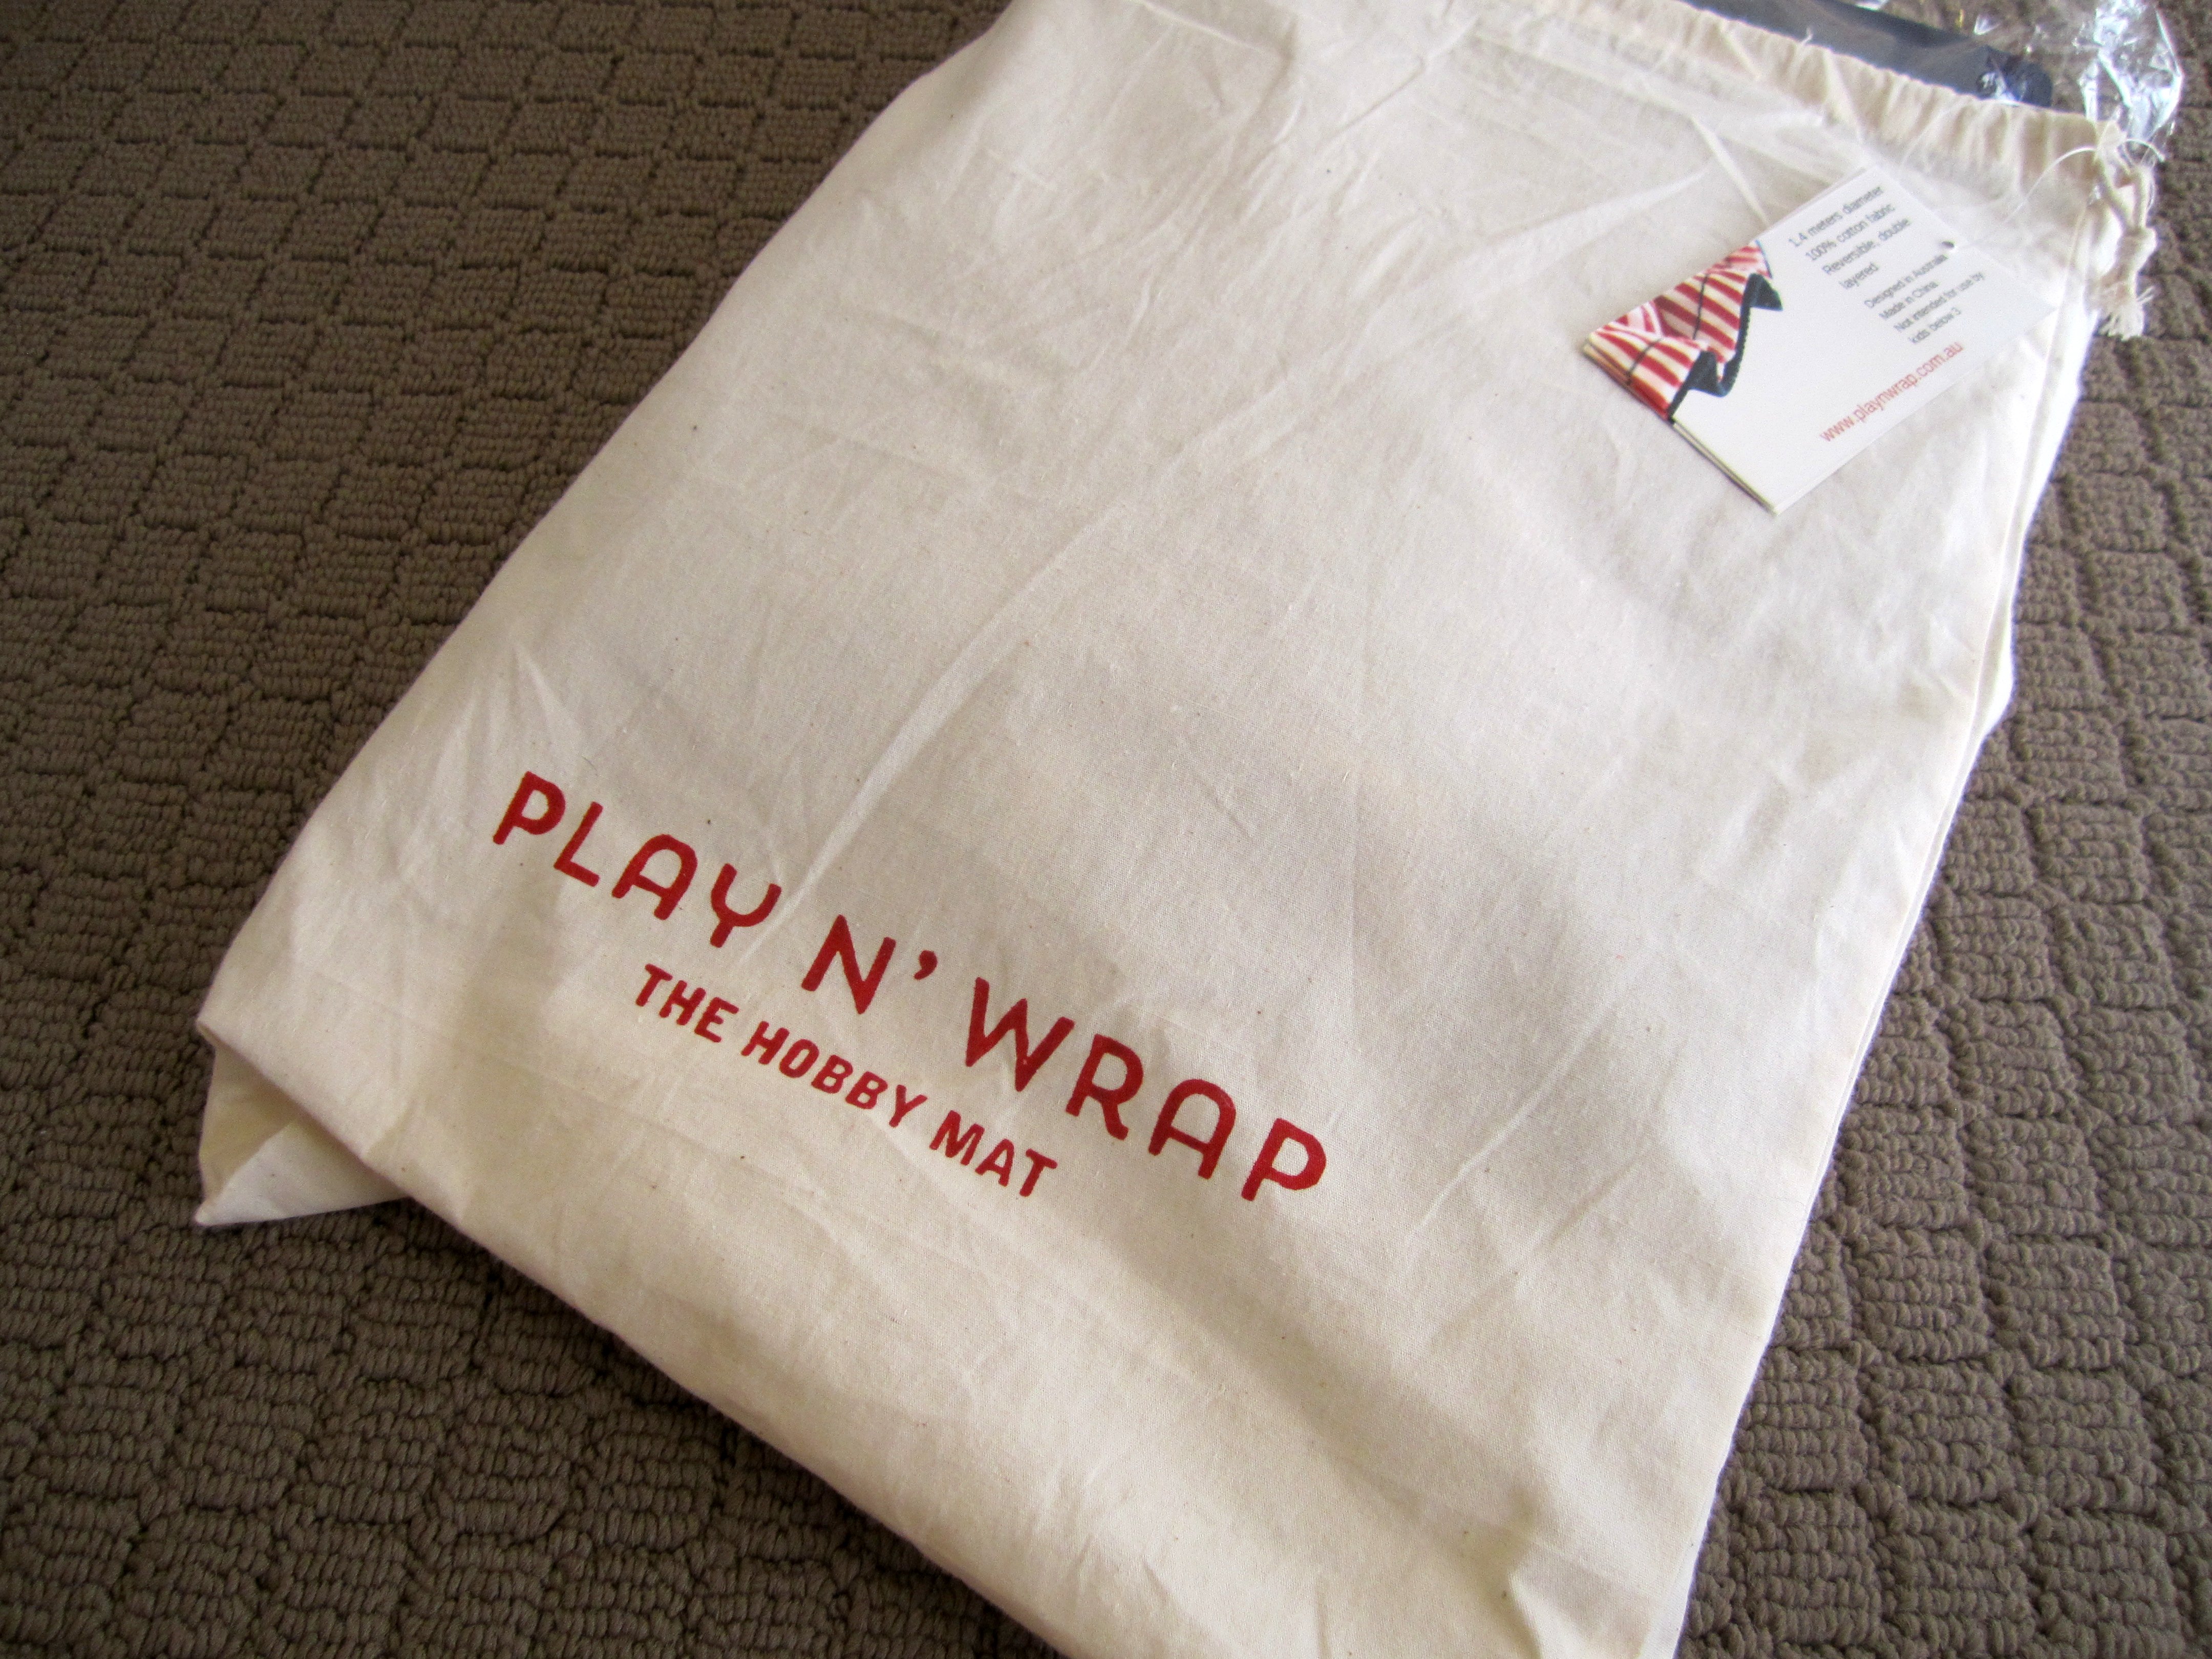 Review + Giveaway: Play N' Wrap Hobby Mat - Jay's Brick Blog